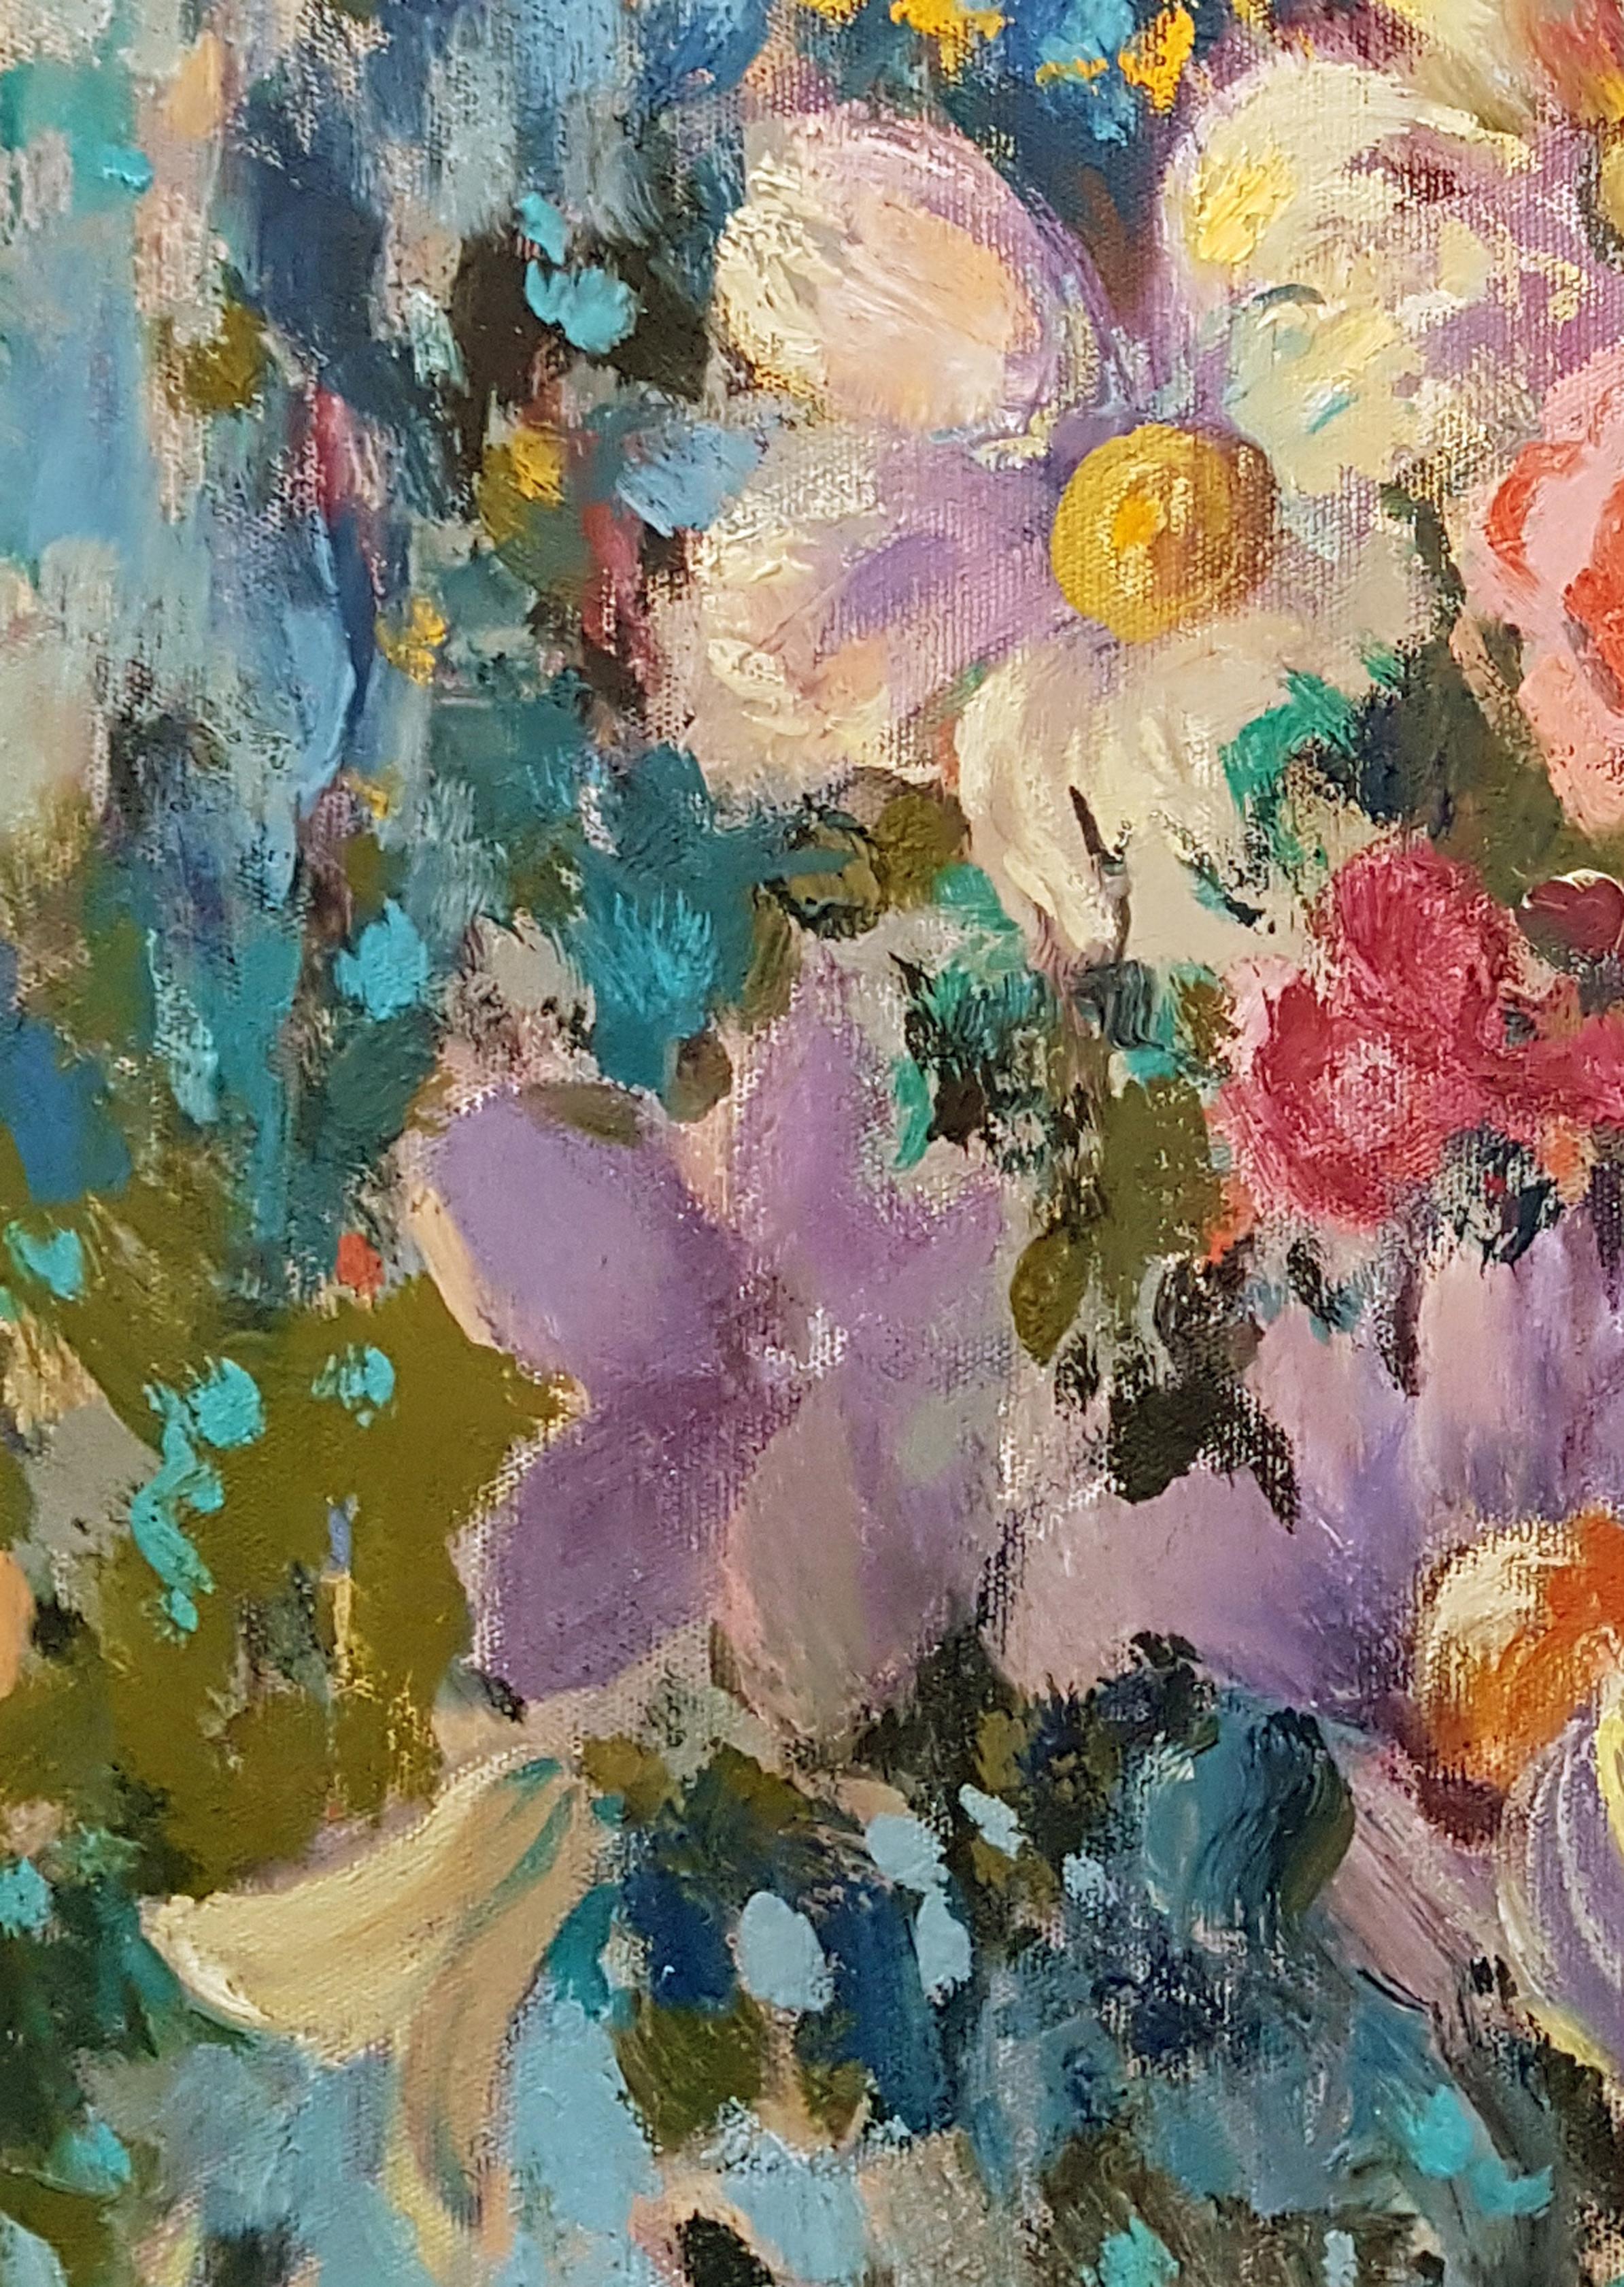 Artist: Ara H. Hakobyan
Work: Original Oil Painting, Handmade Artwork, One of a Kind
Medium: Oil on Canvas
Year: 2019
Style: Impressionism
Title: Wild Flowers
Size: 20